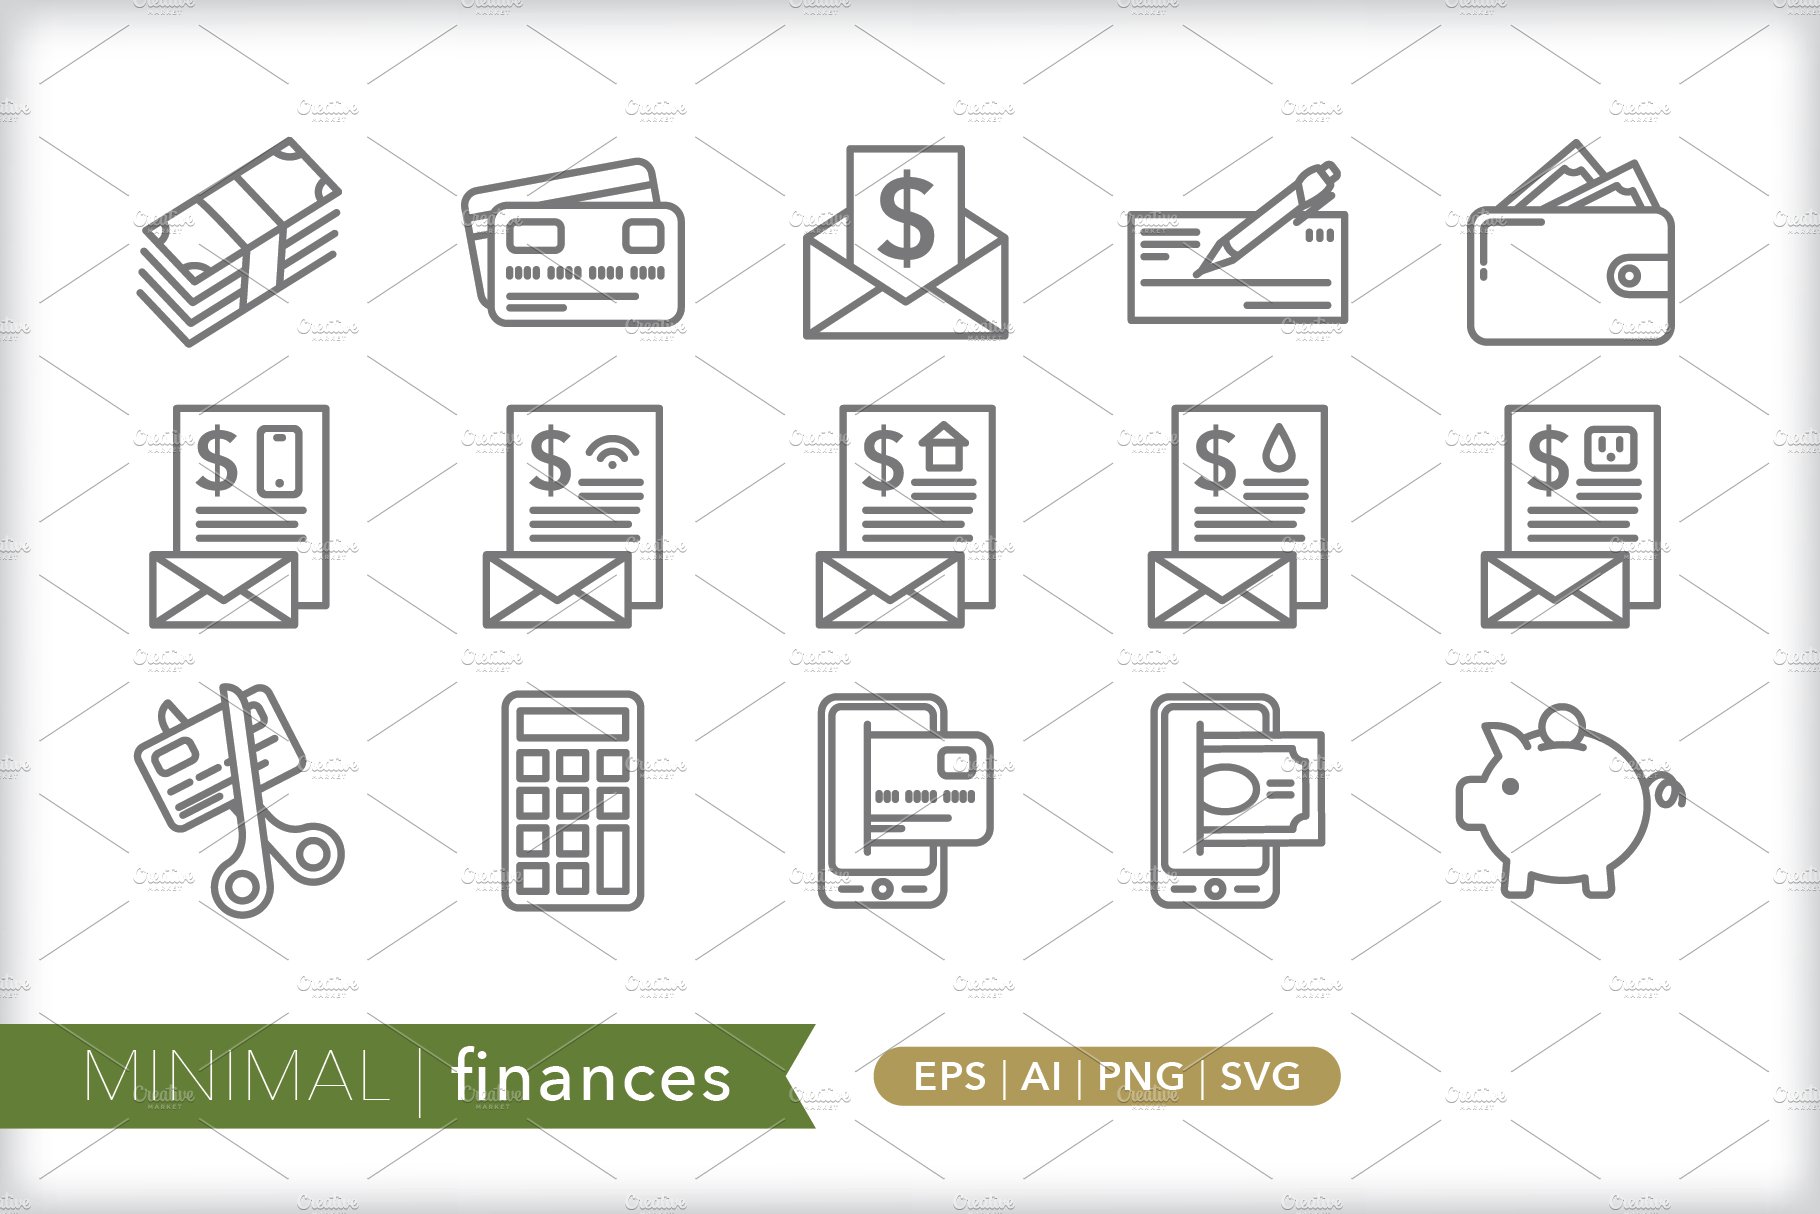 Minimal finances icons cover image.